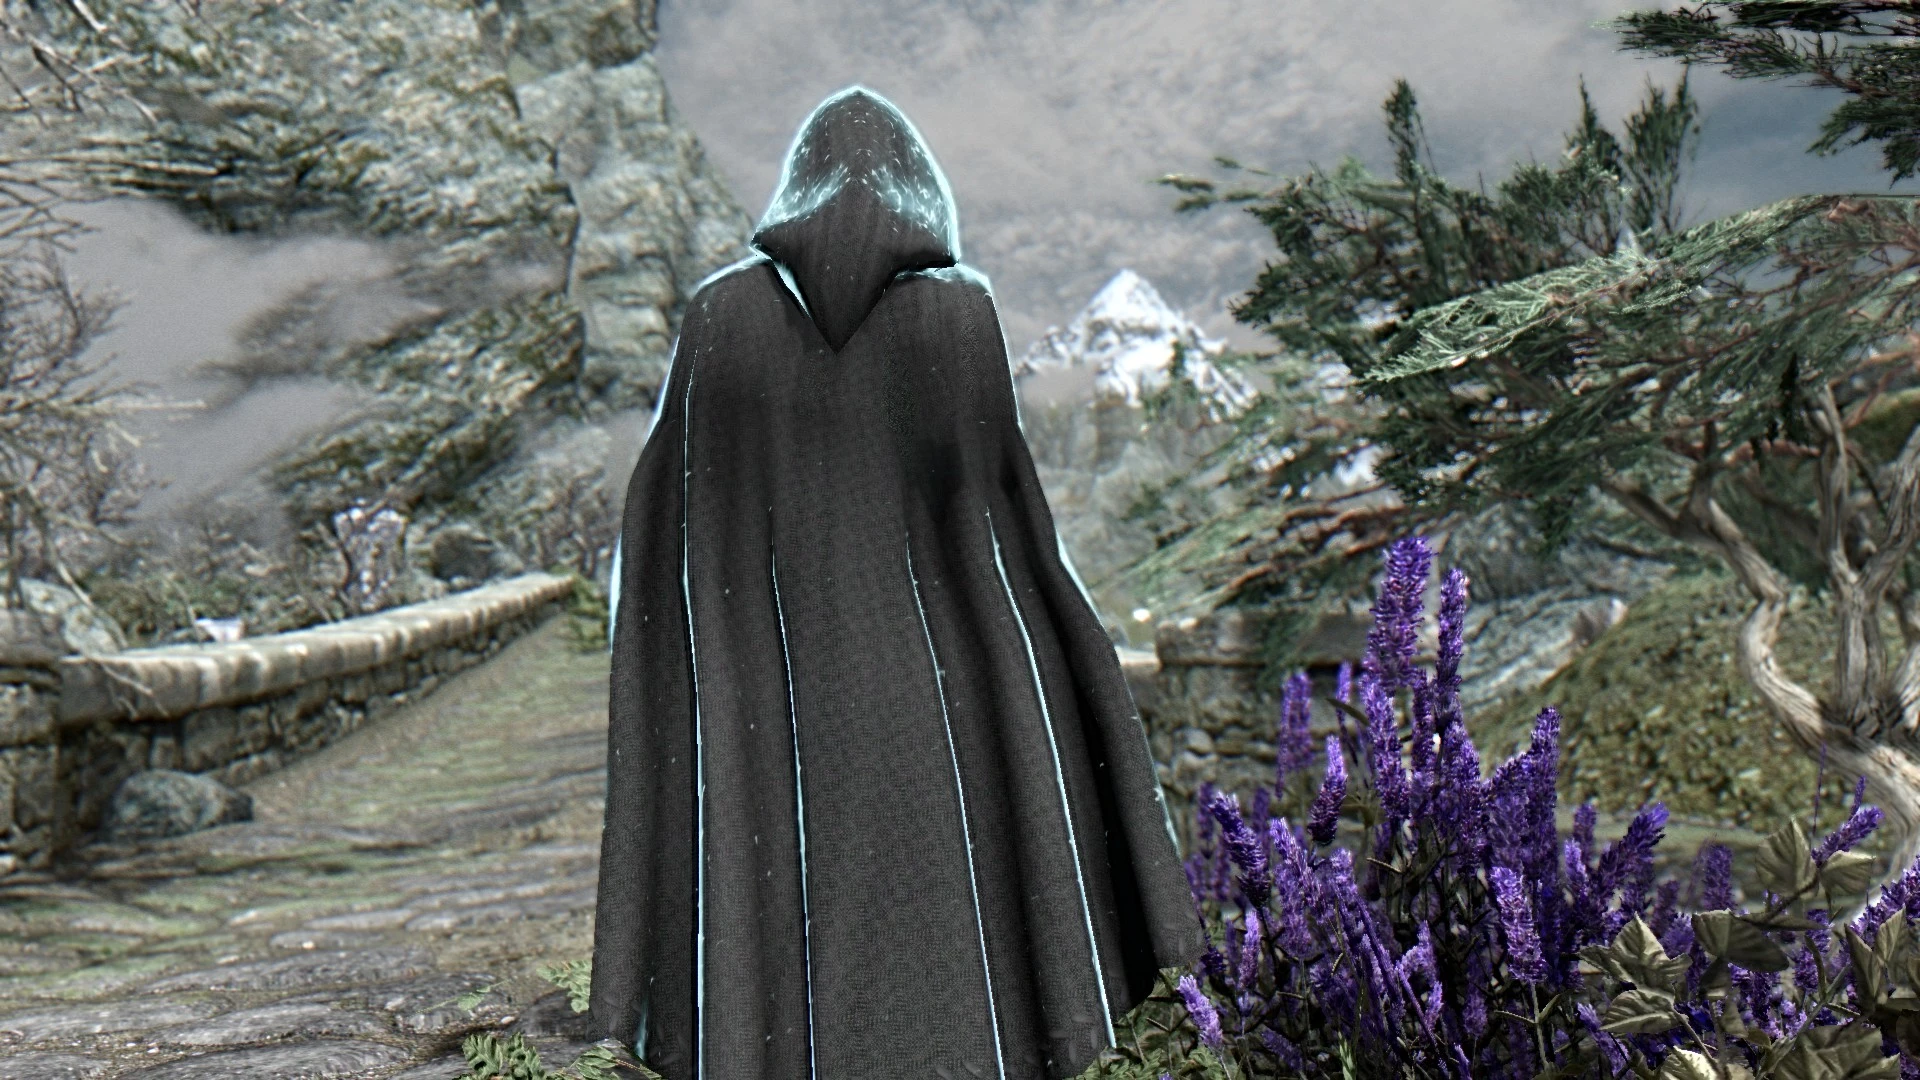 skyrim cloaks and capes mod ps4